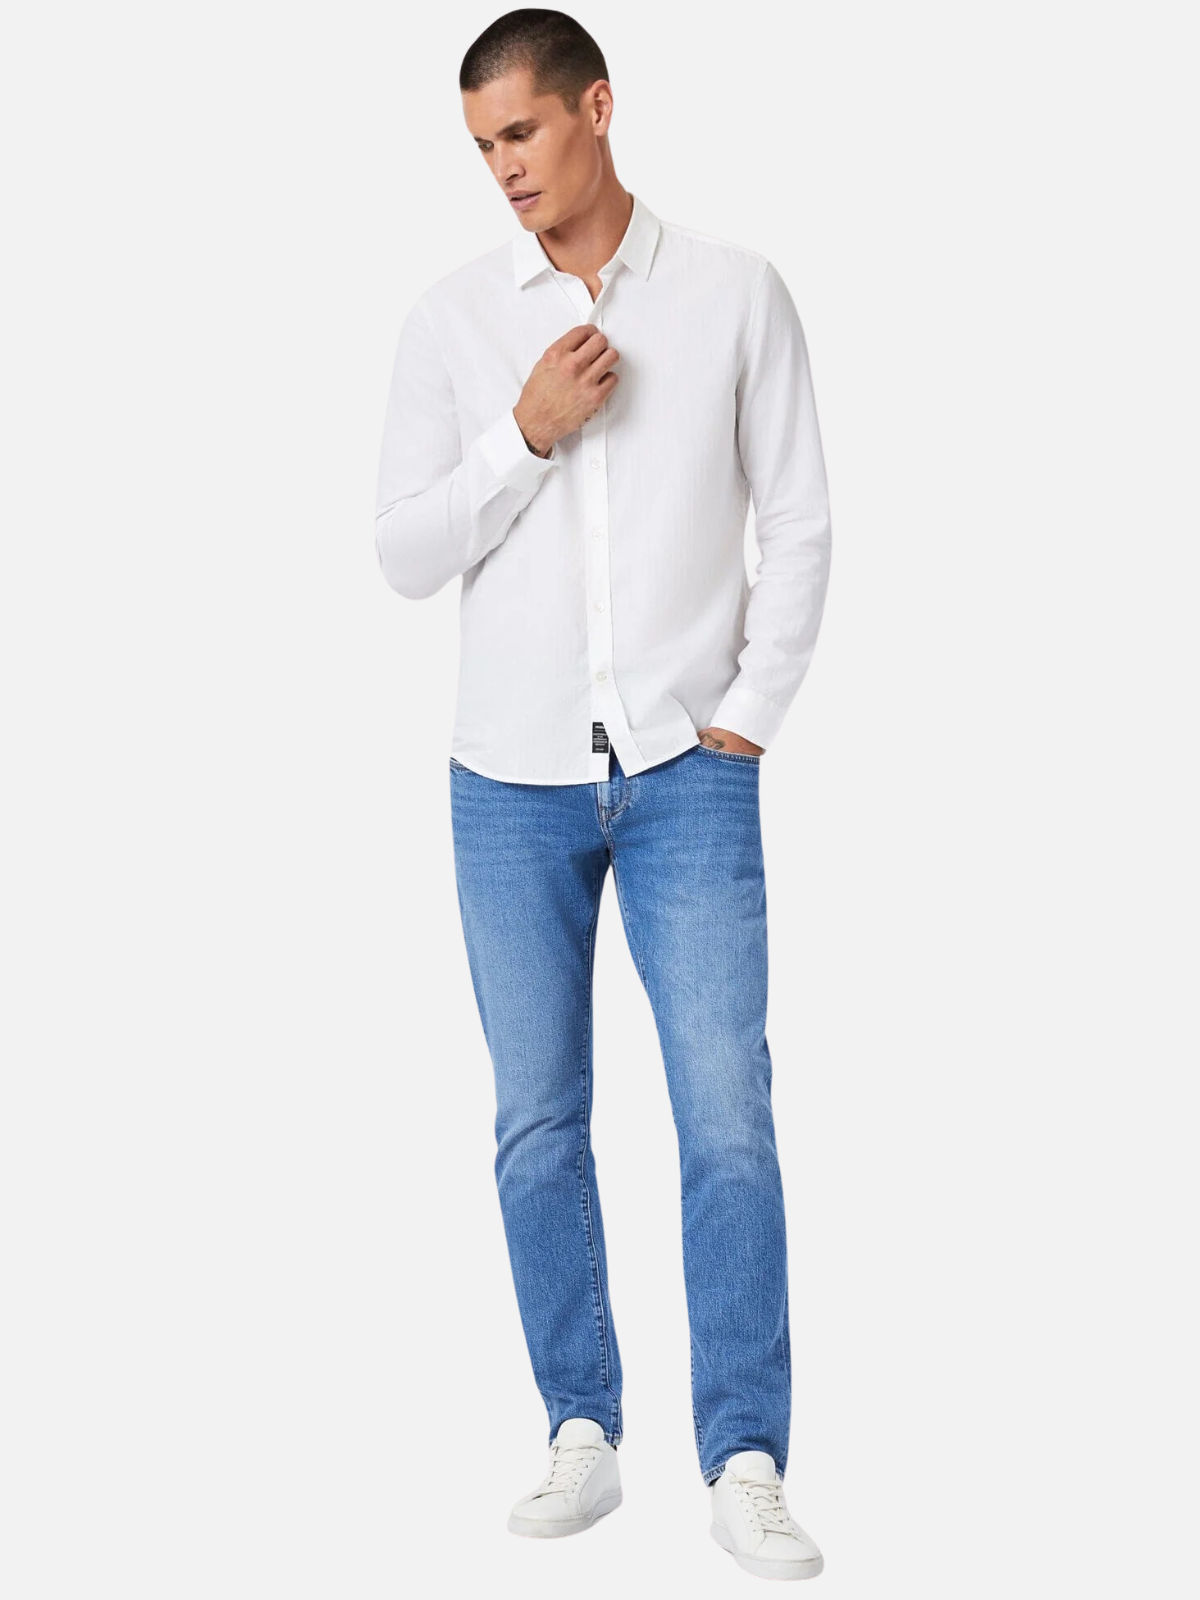 mavi ls long sleeve jacquard shirt white button down dress shirt lightweight 100% cotton embroidered logo kempt athens ga georgia men's clothing store